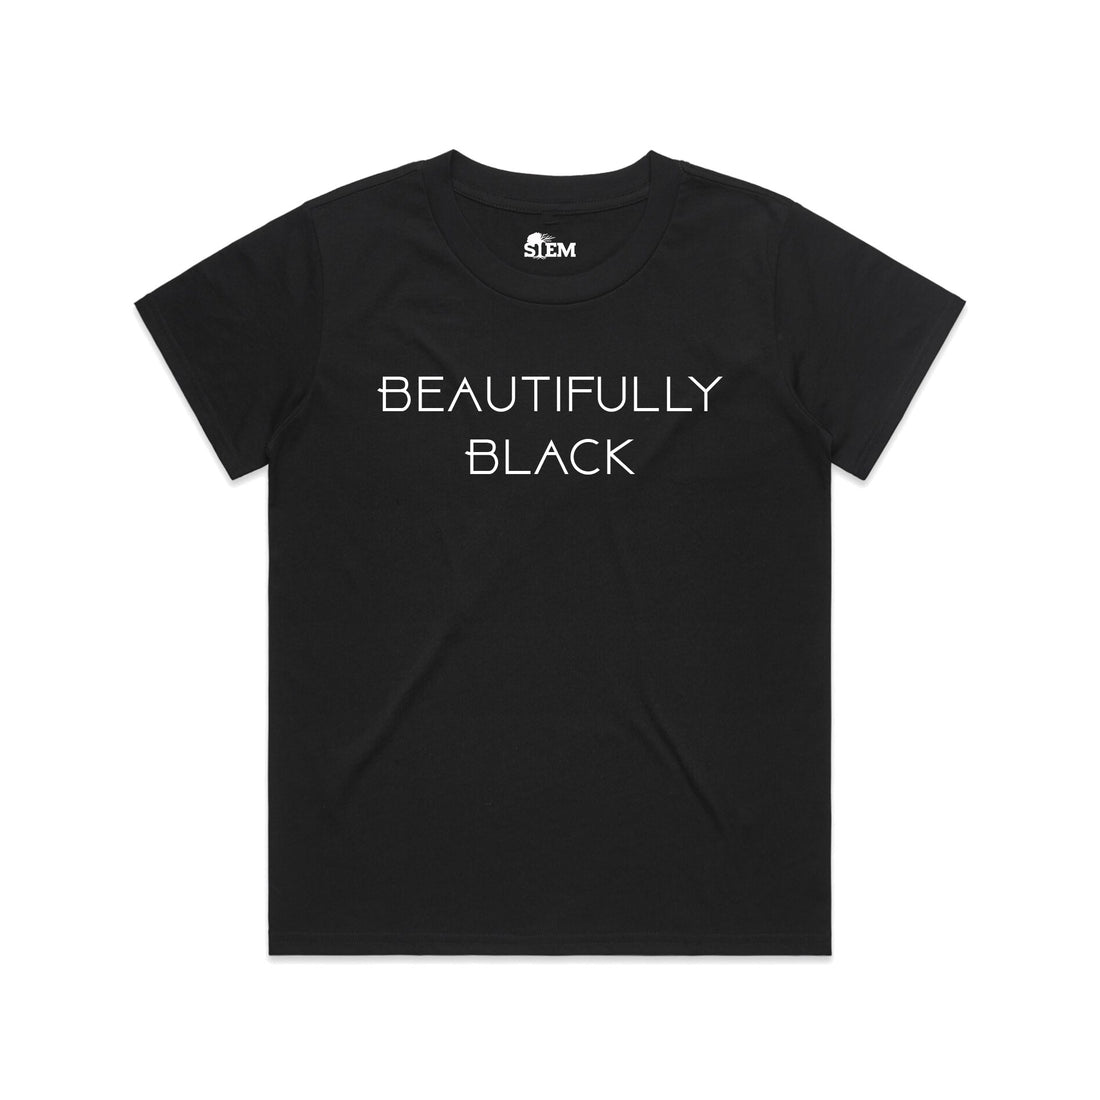 STEM Woman's "Beautifully Black" T-Shirt